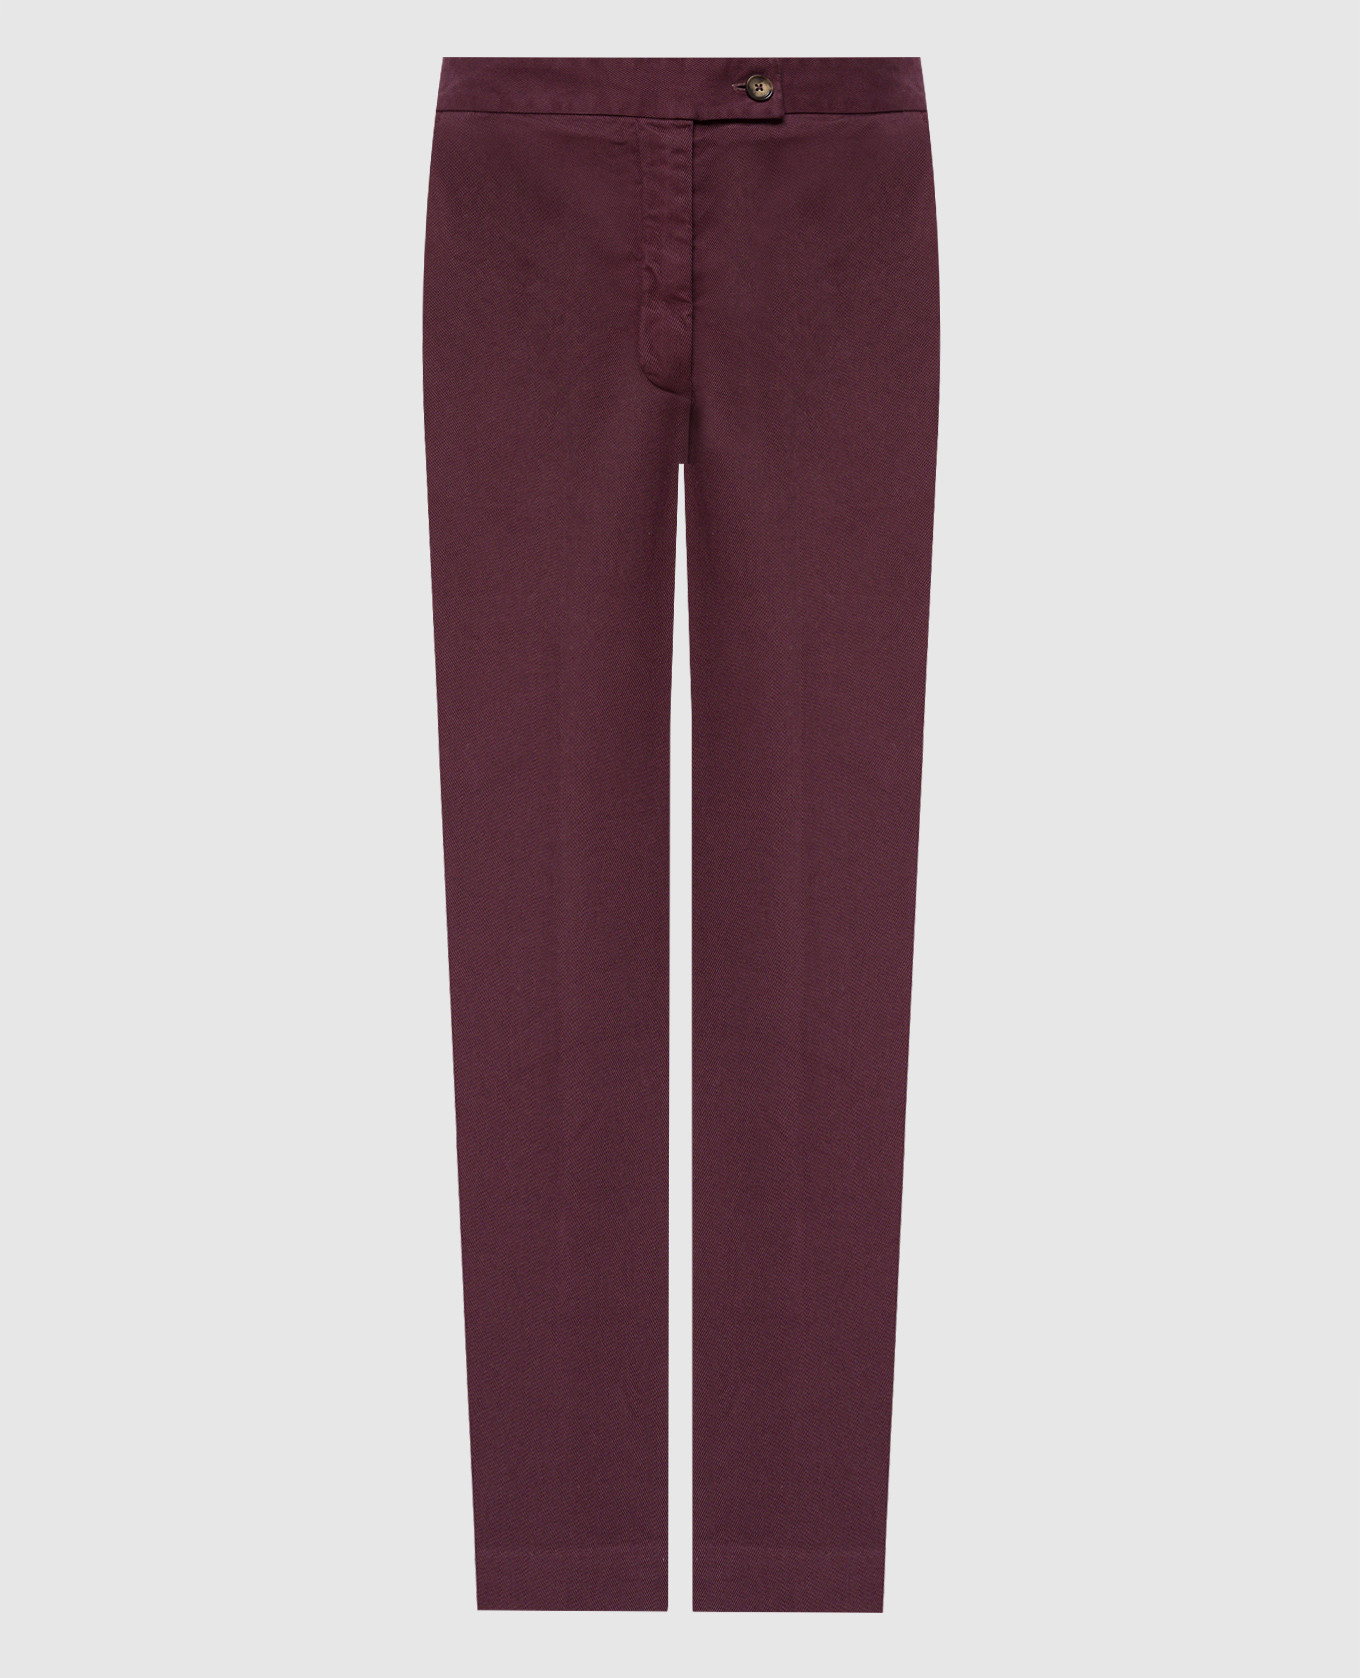 Burgundy pants with lapels